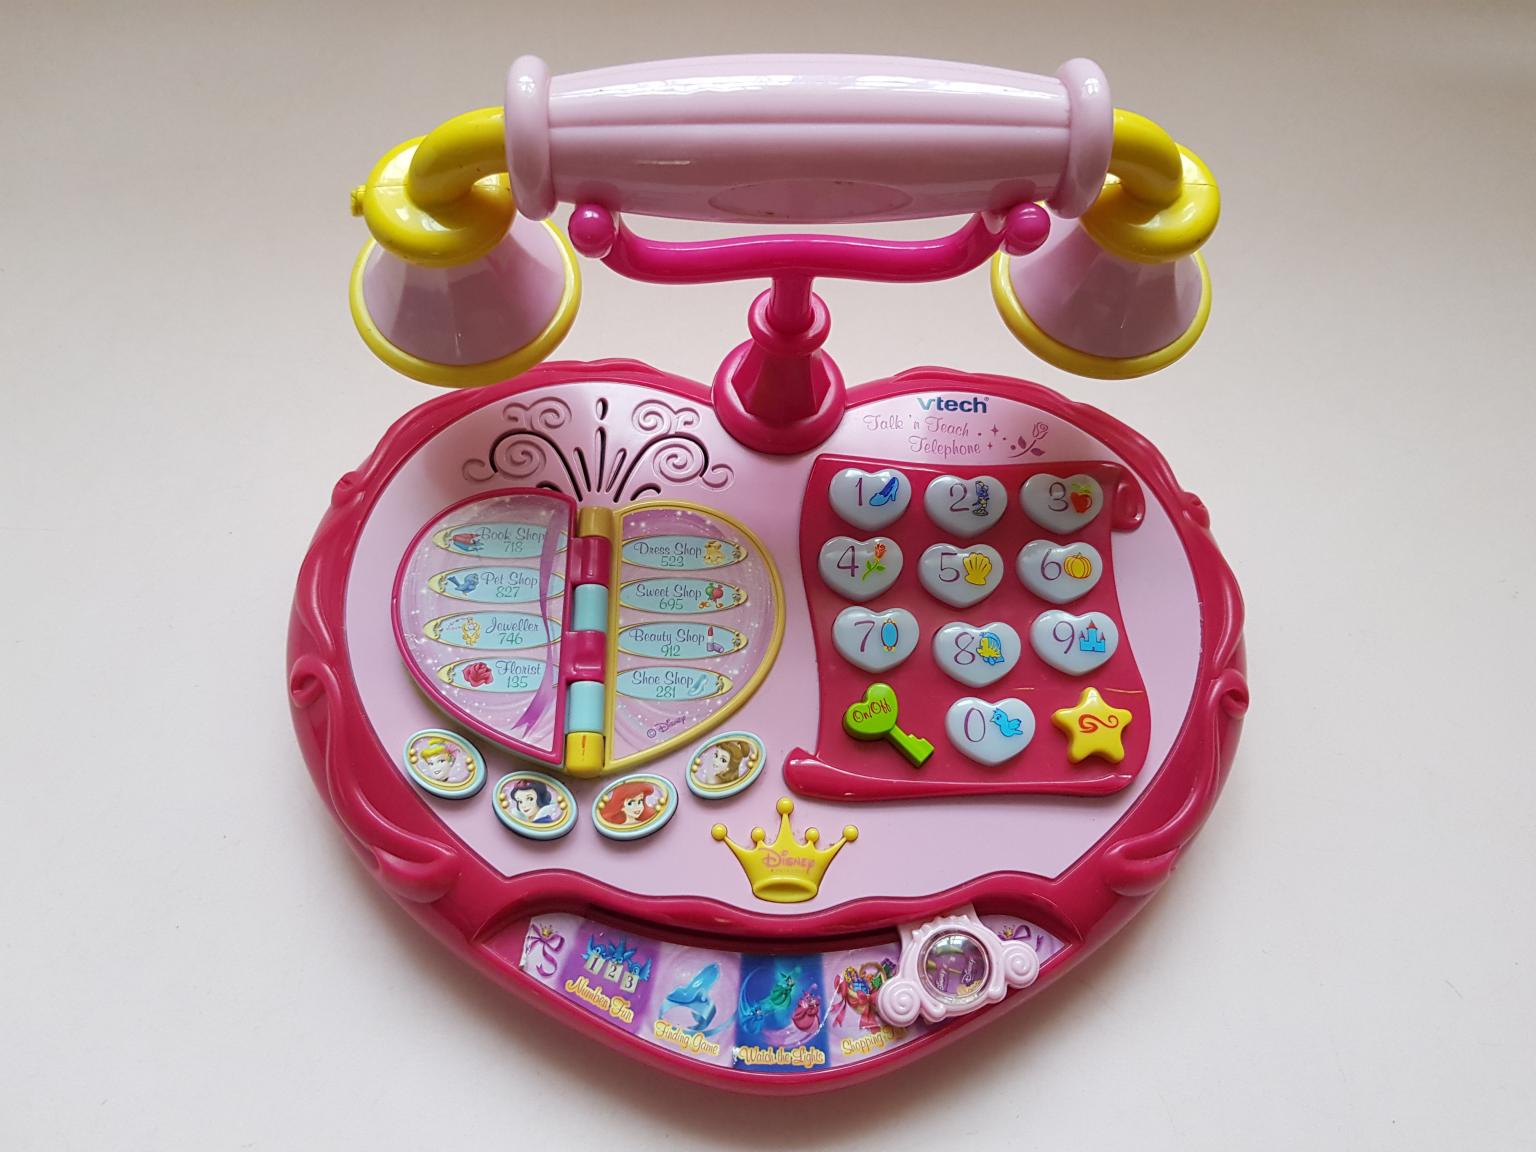 VTech Disney Princess Talk 'n Teach Telephone in SW17